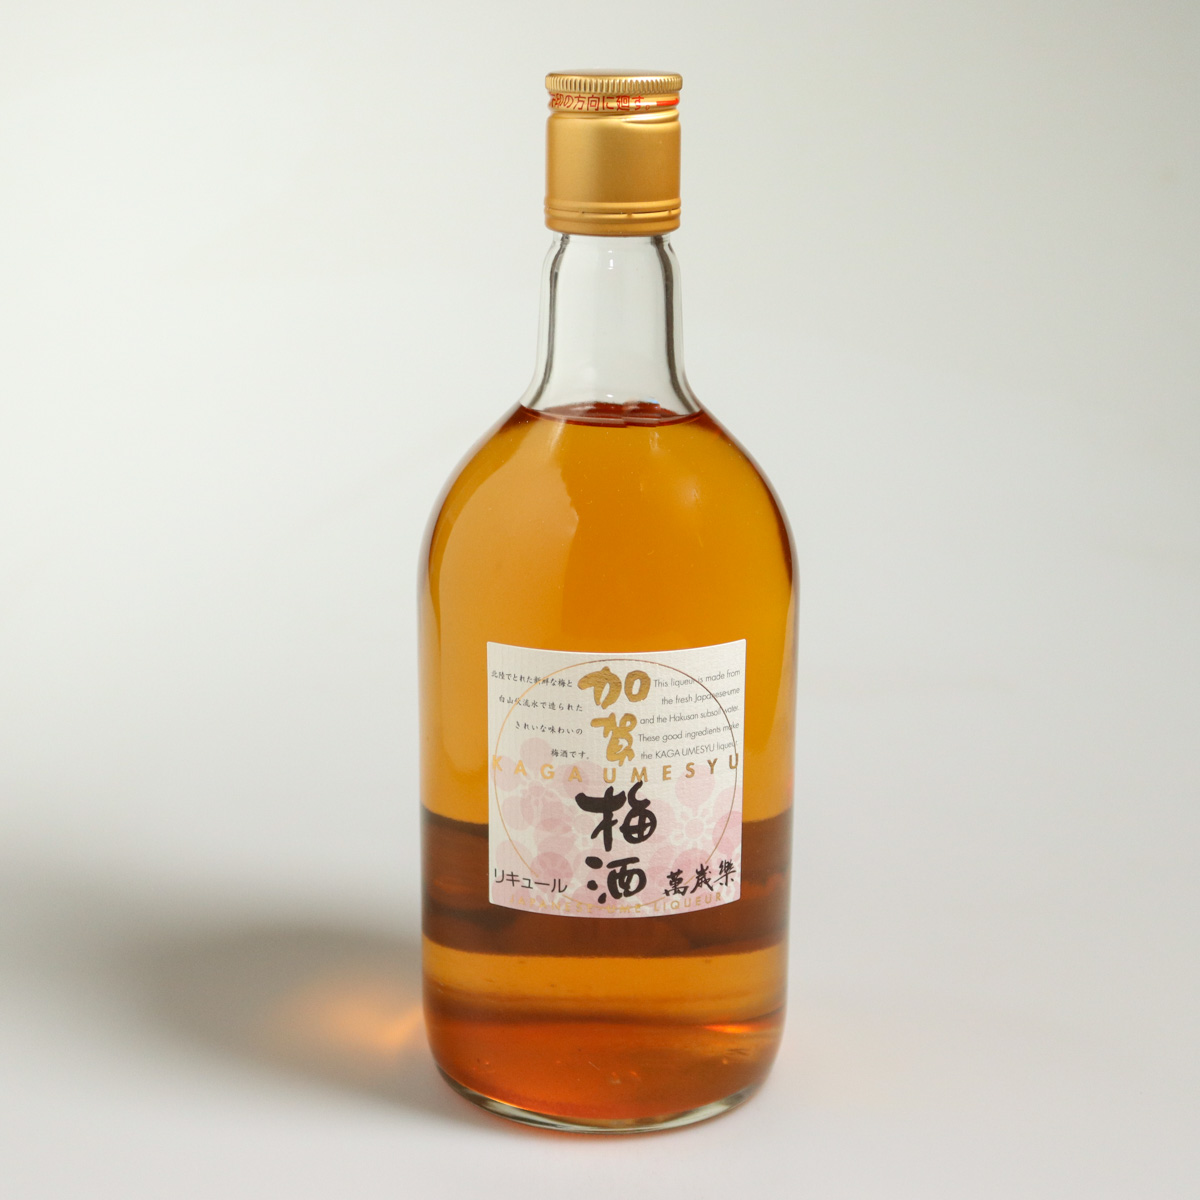 umeshu manzairaku liqueur de prune japonaise